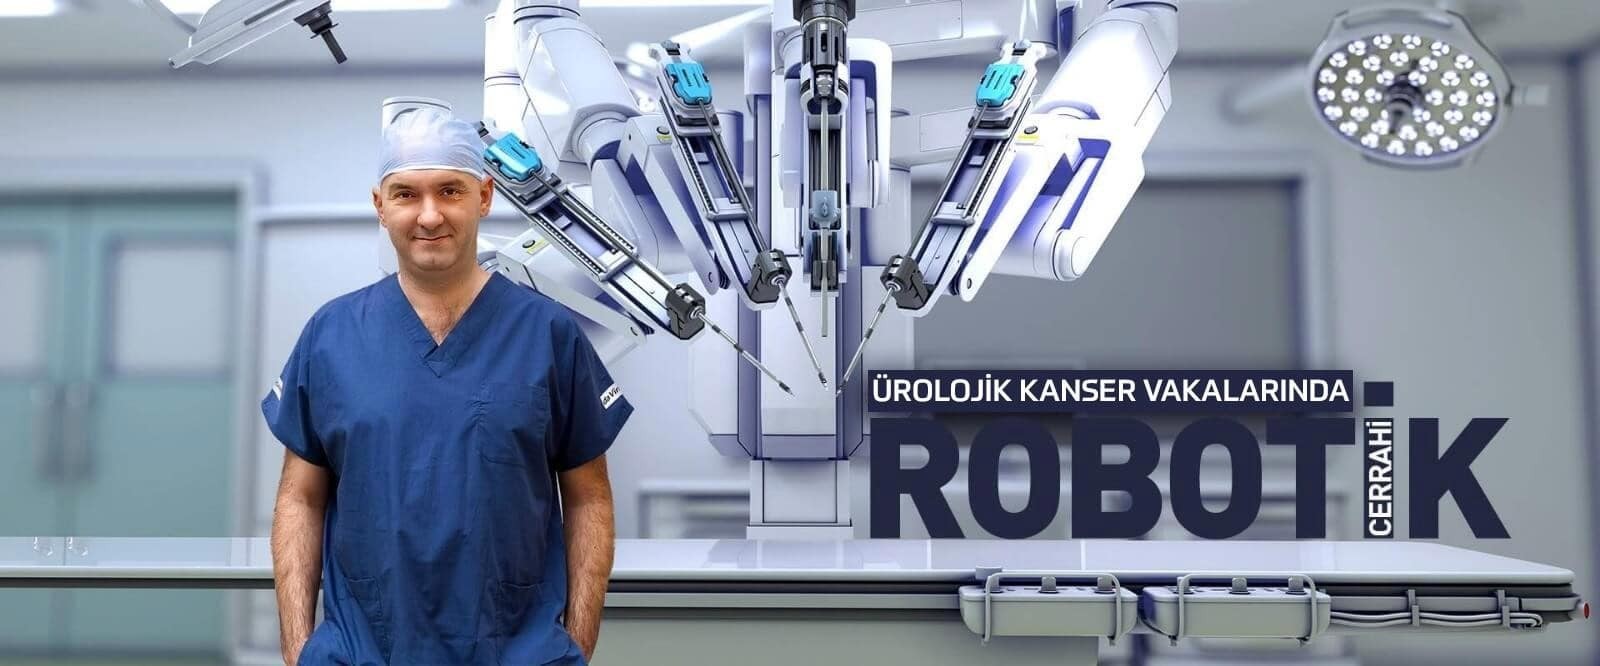 böbrek kanseri robotik cerrahi